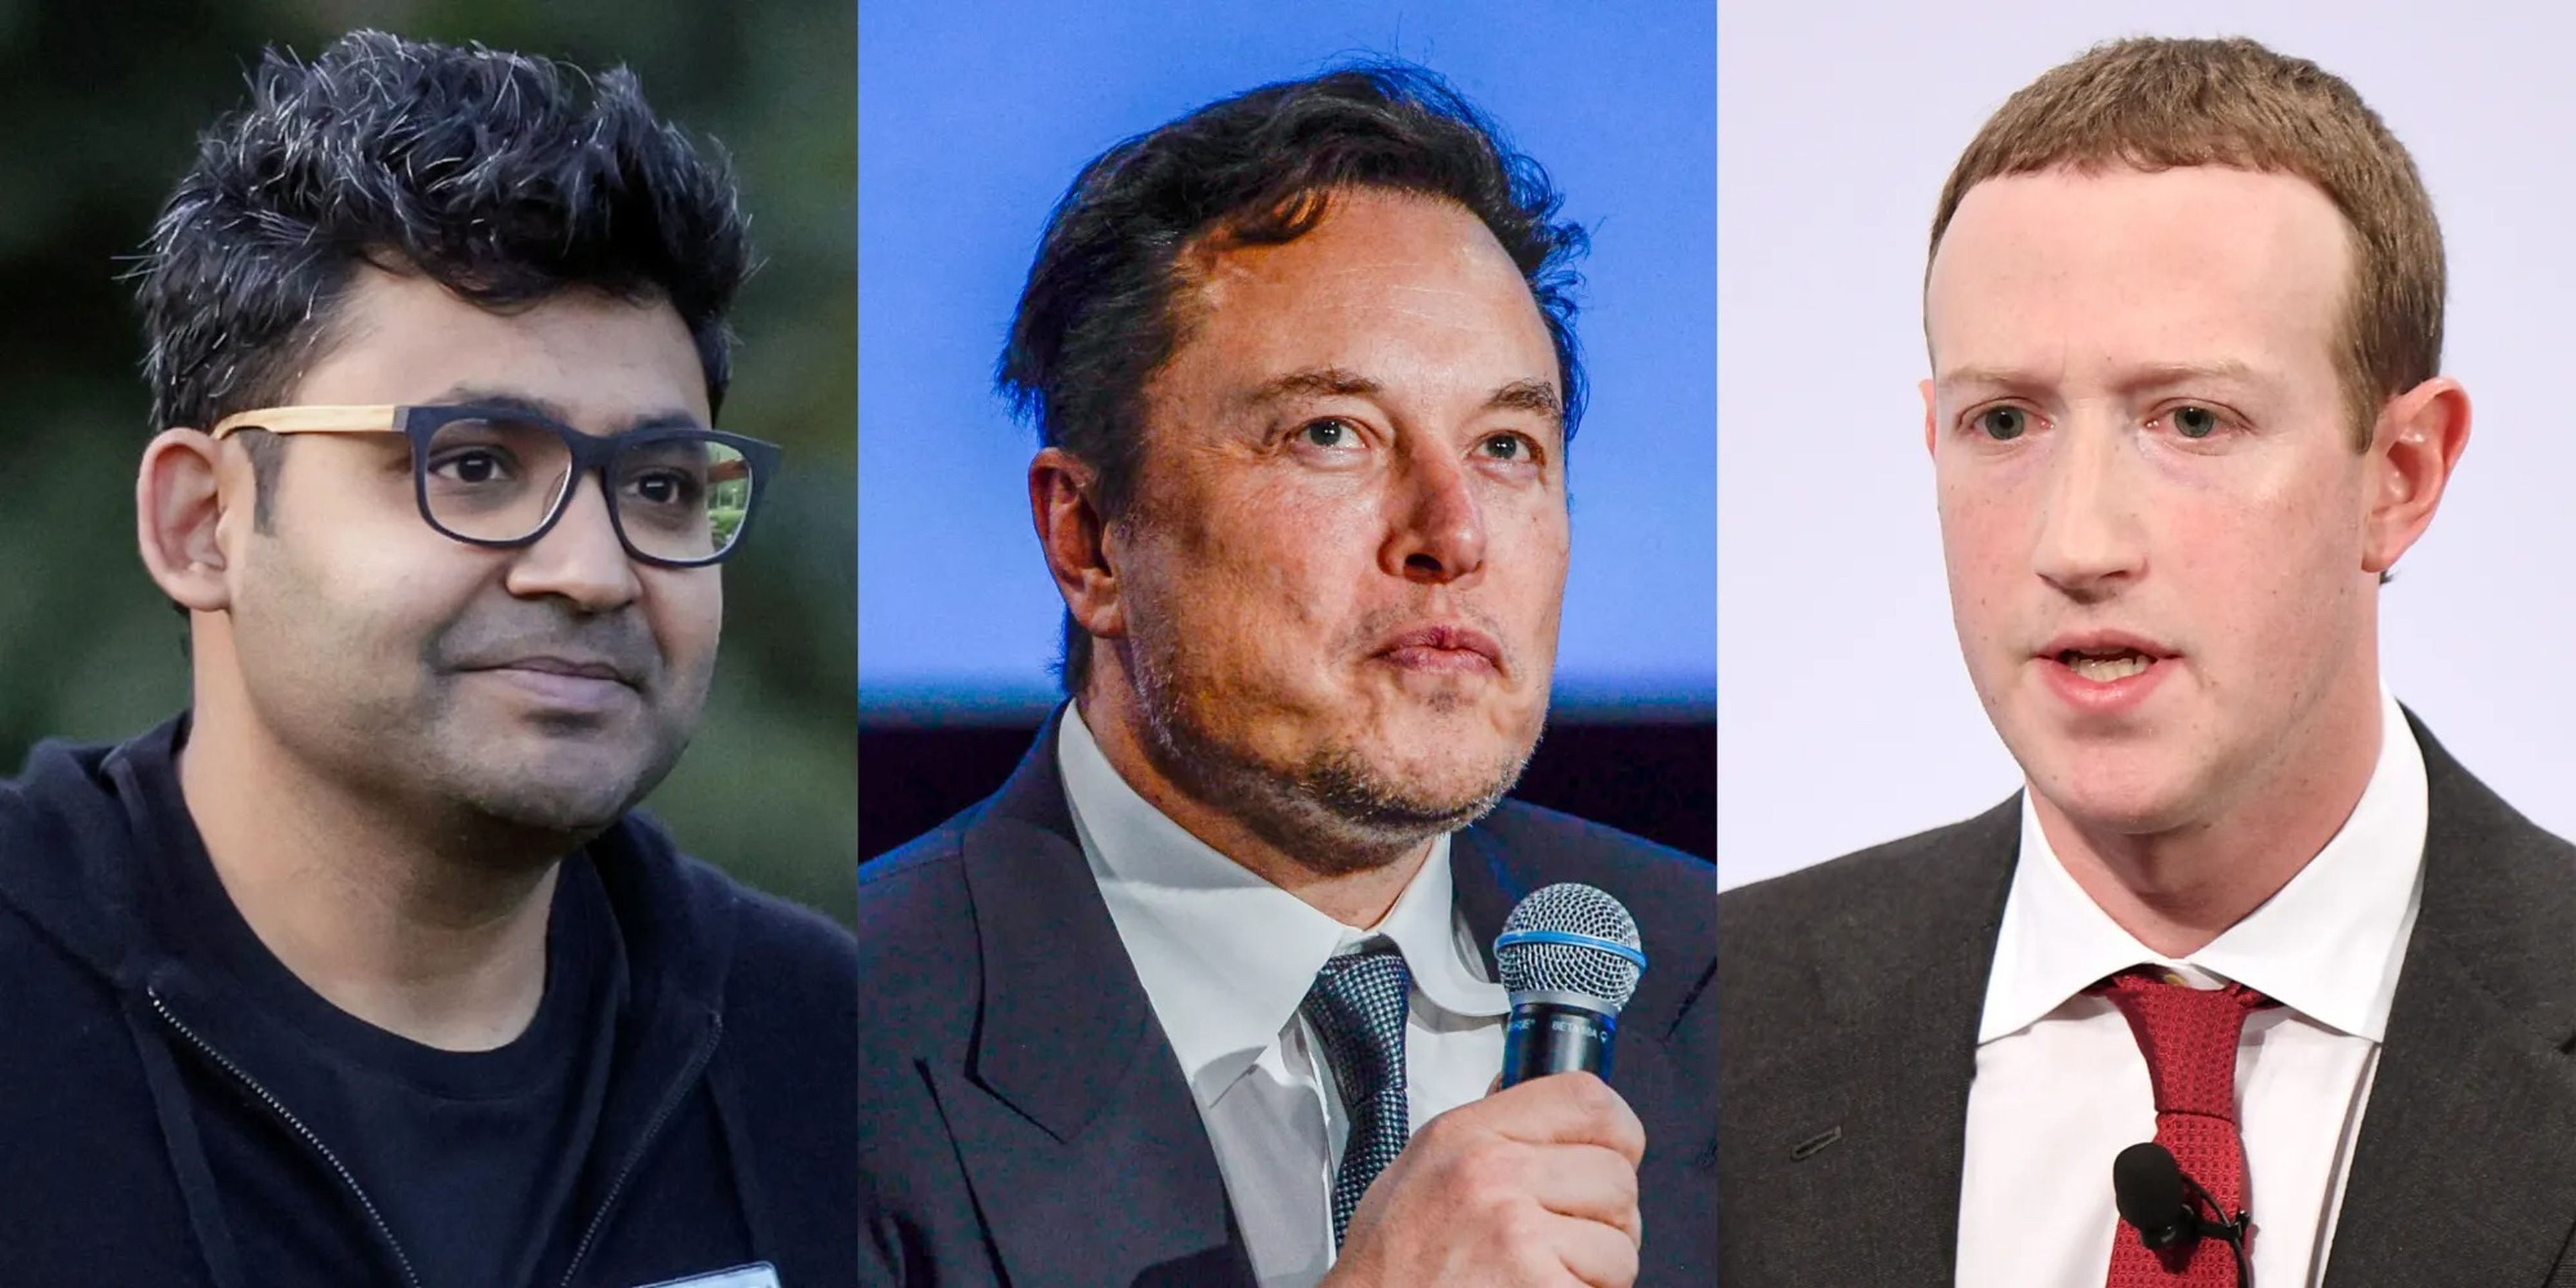 Parag Agrawal, Elon Musk and Mark Zuckerberg